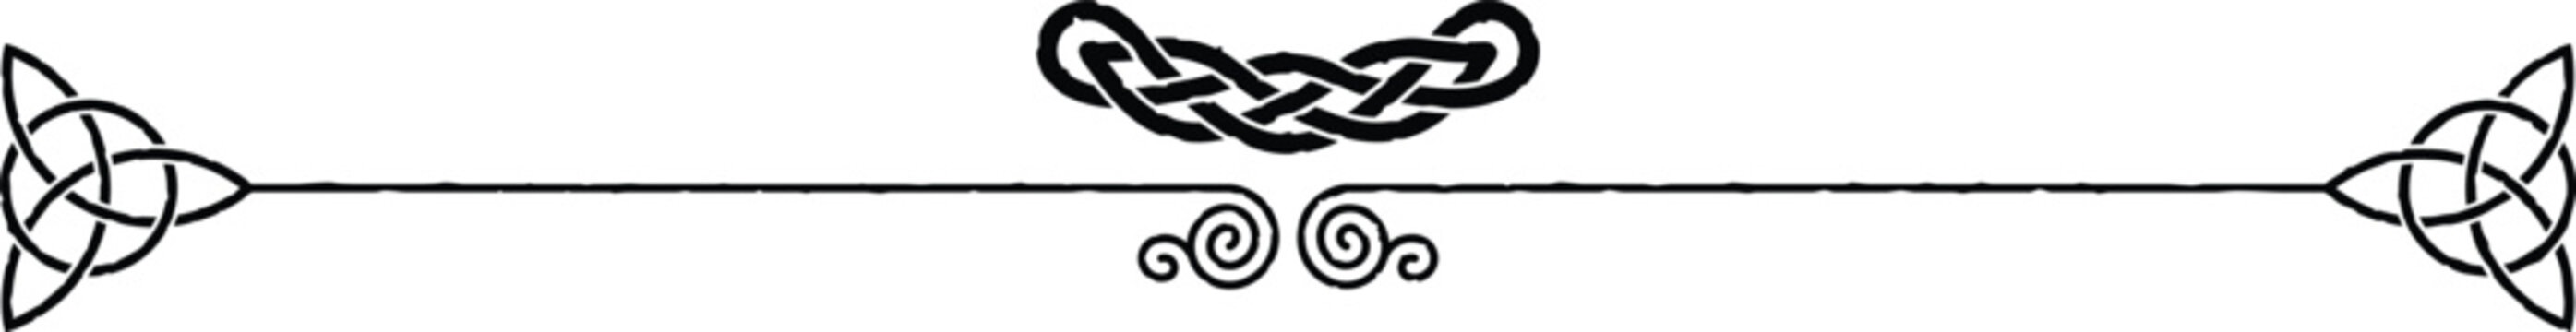 Celtic Header - Spiral, Triquetra, Curved Knot